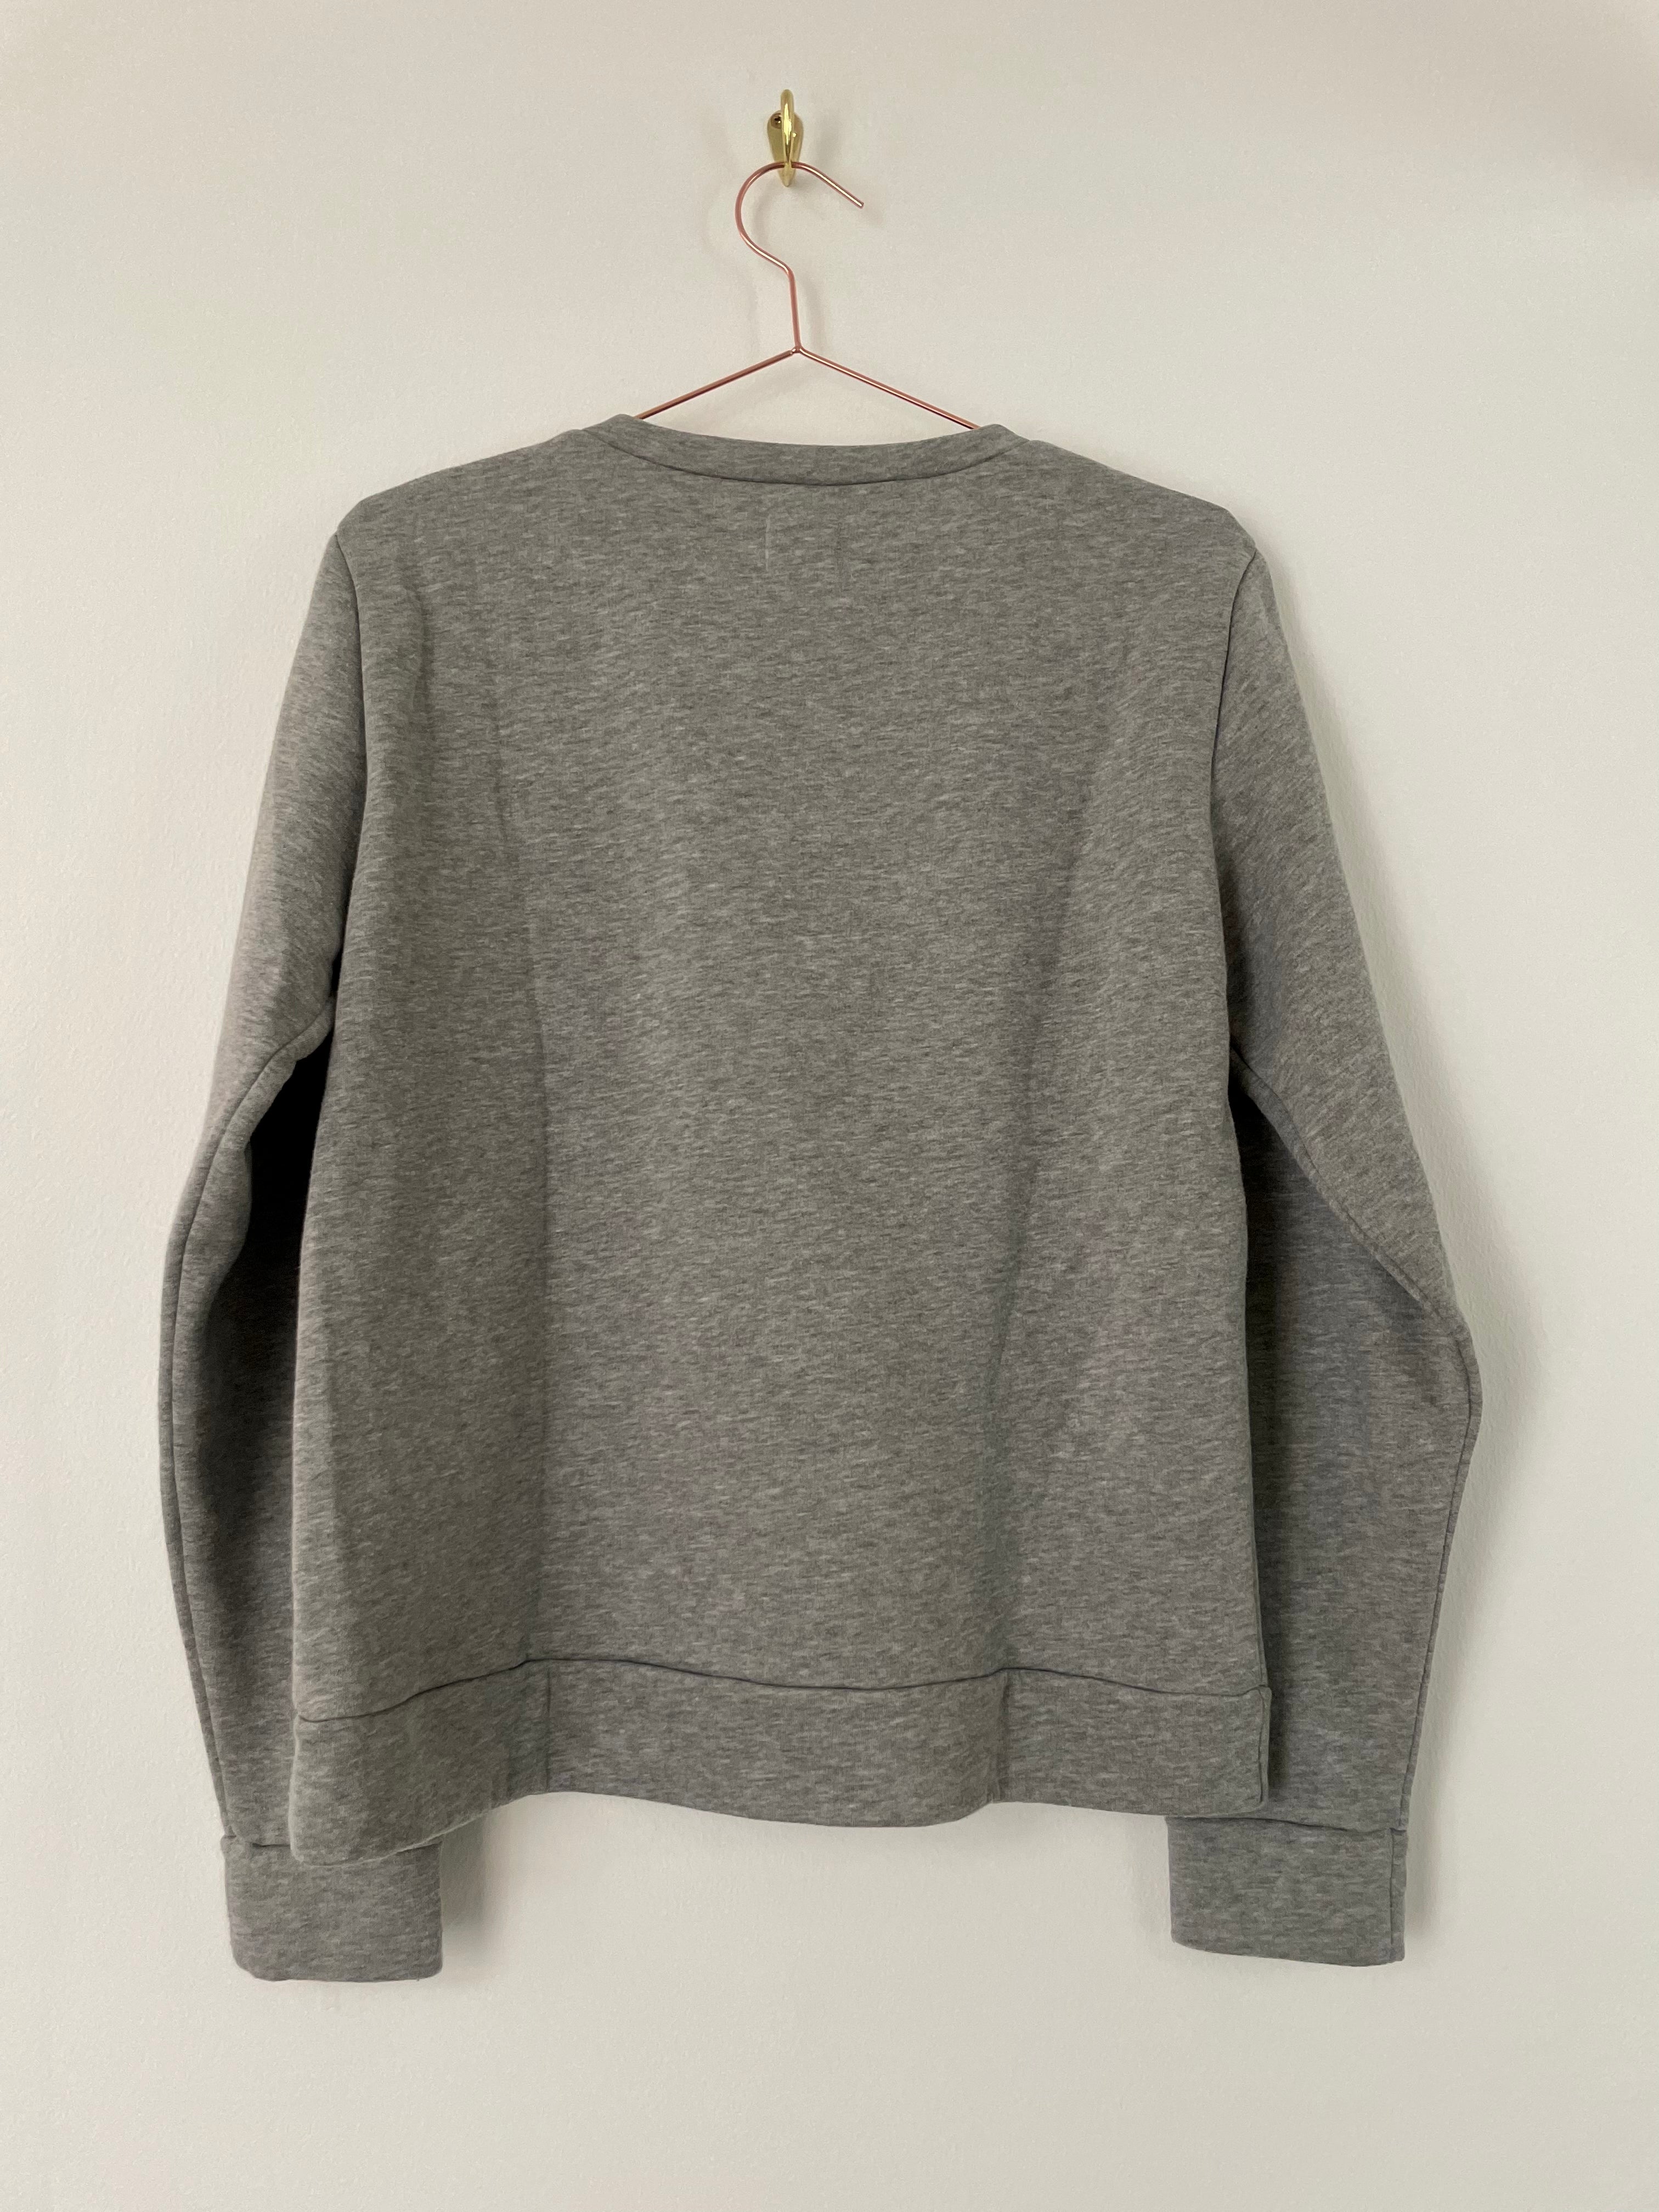 Grey sweater - SONGE LAB - M/L